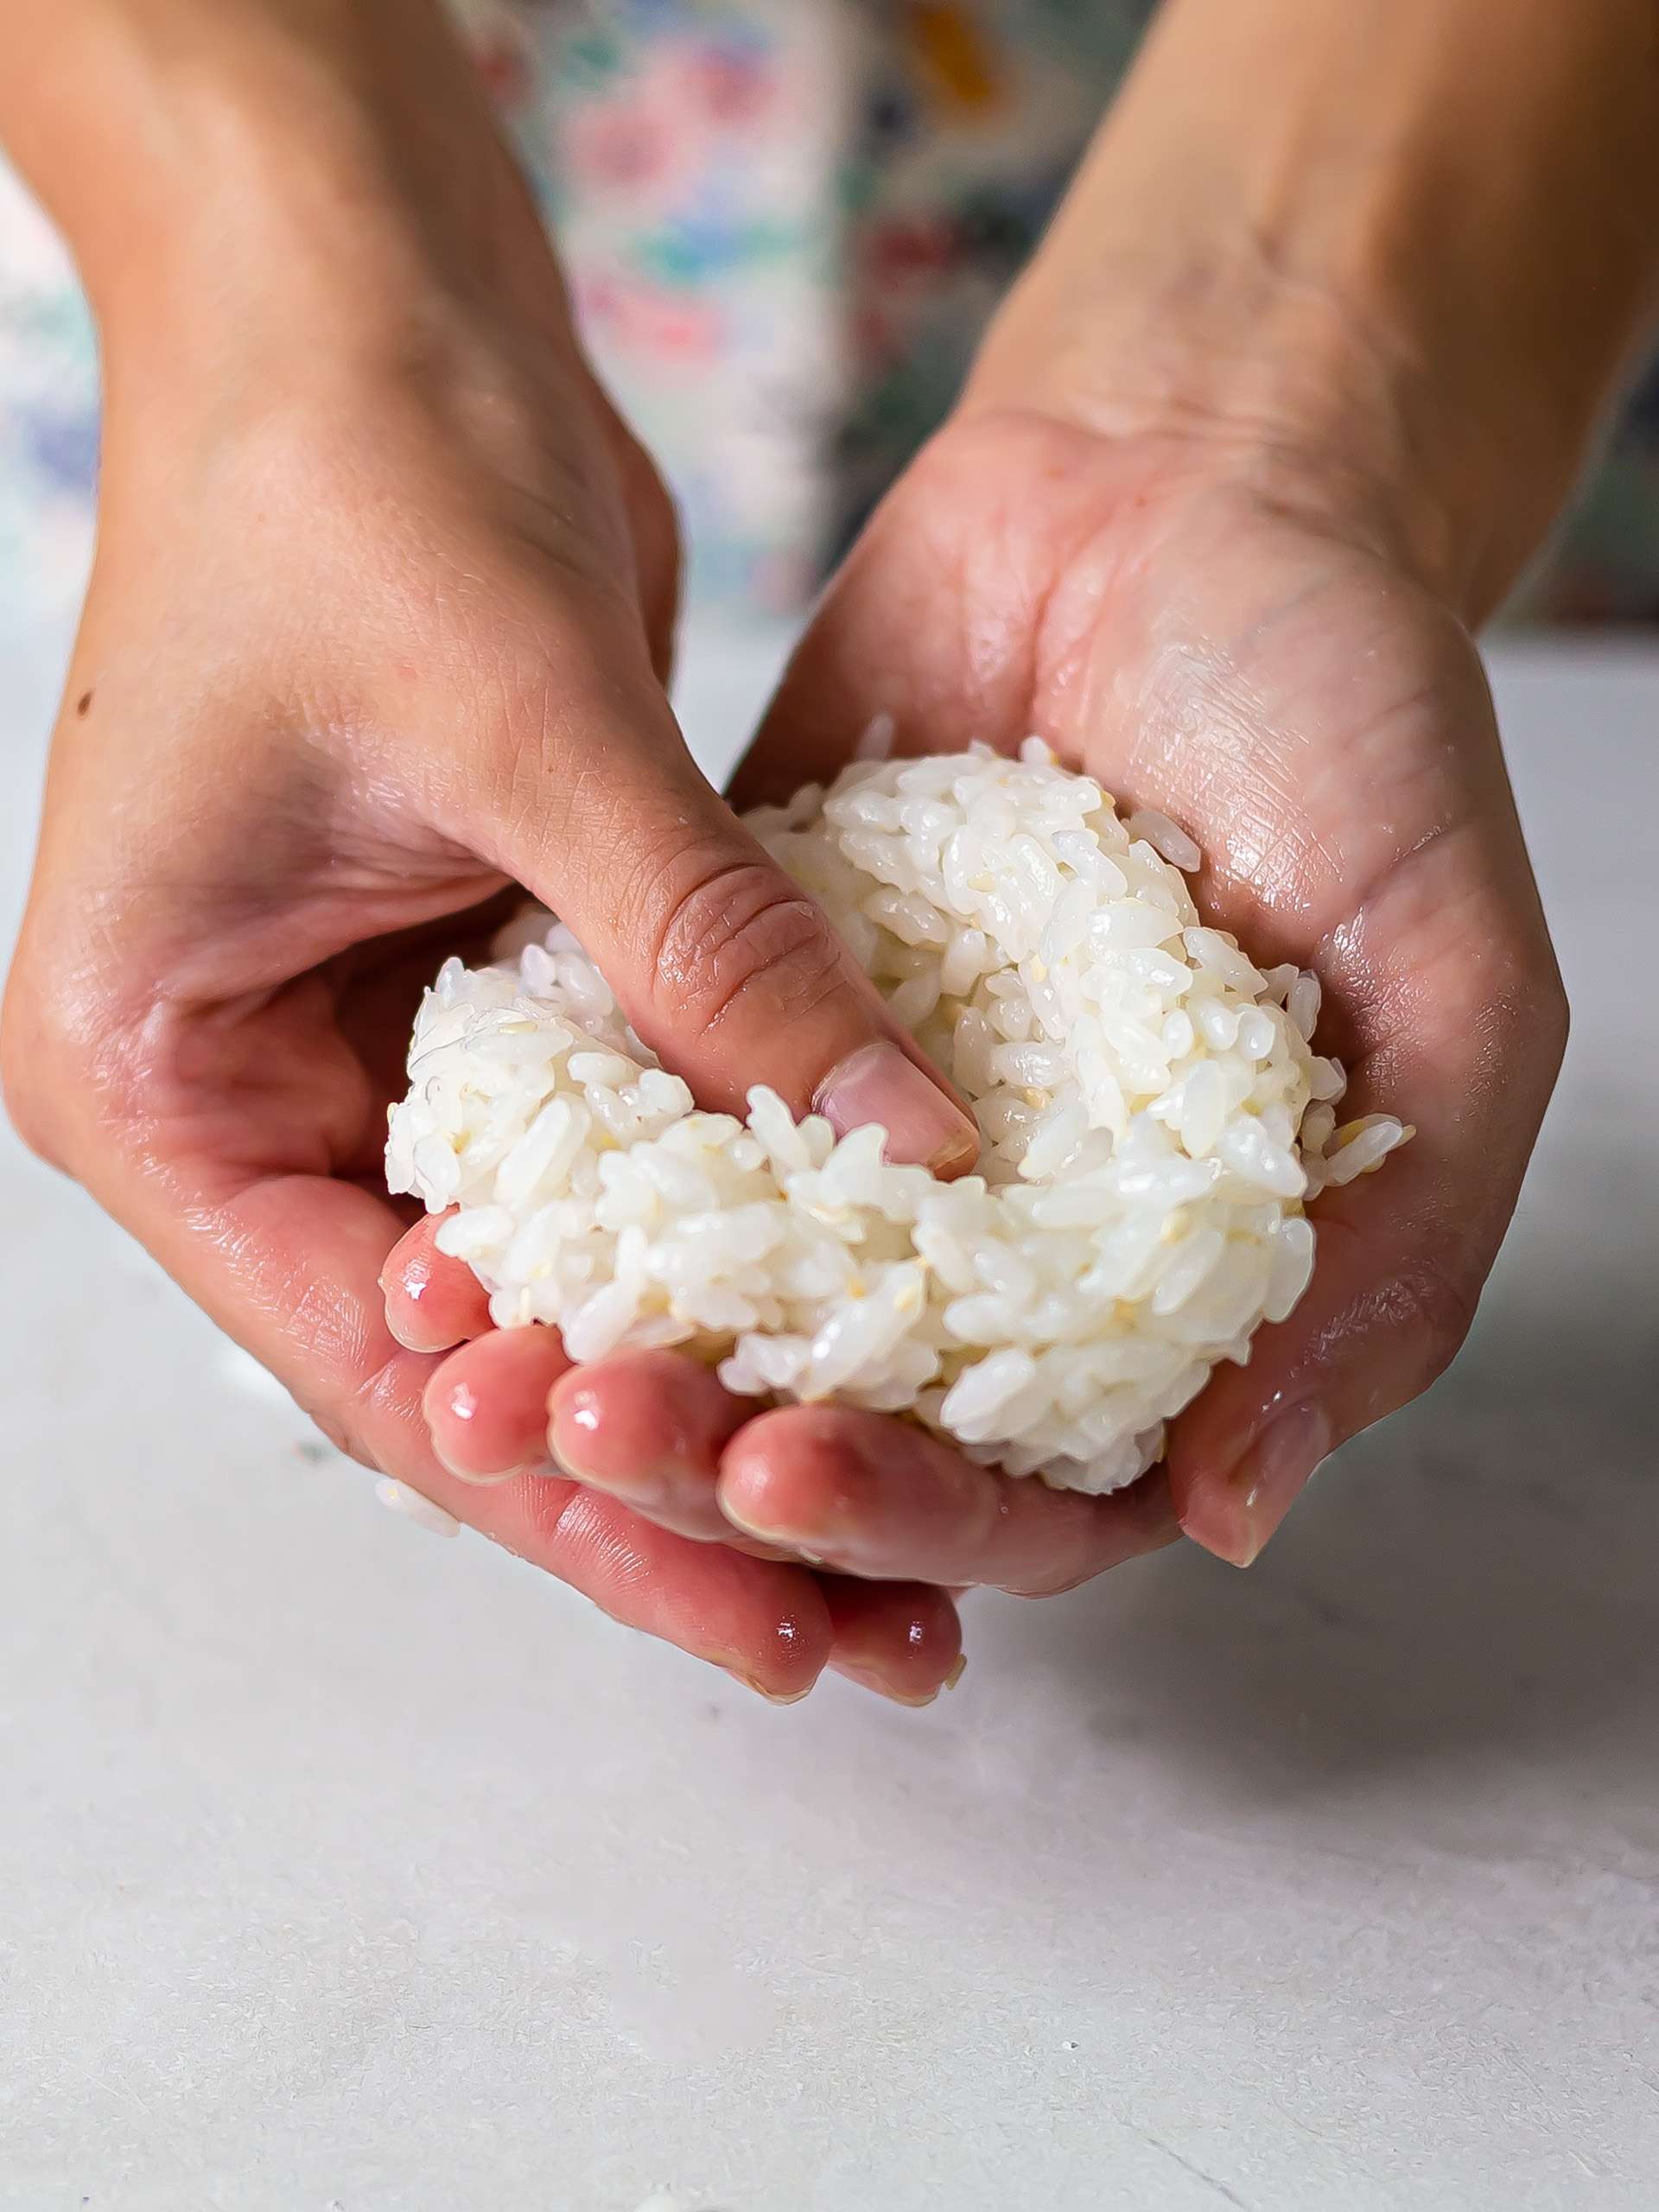 pocket in onigiri rice ball for filling